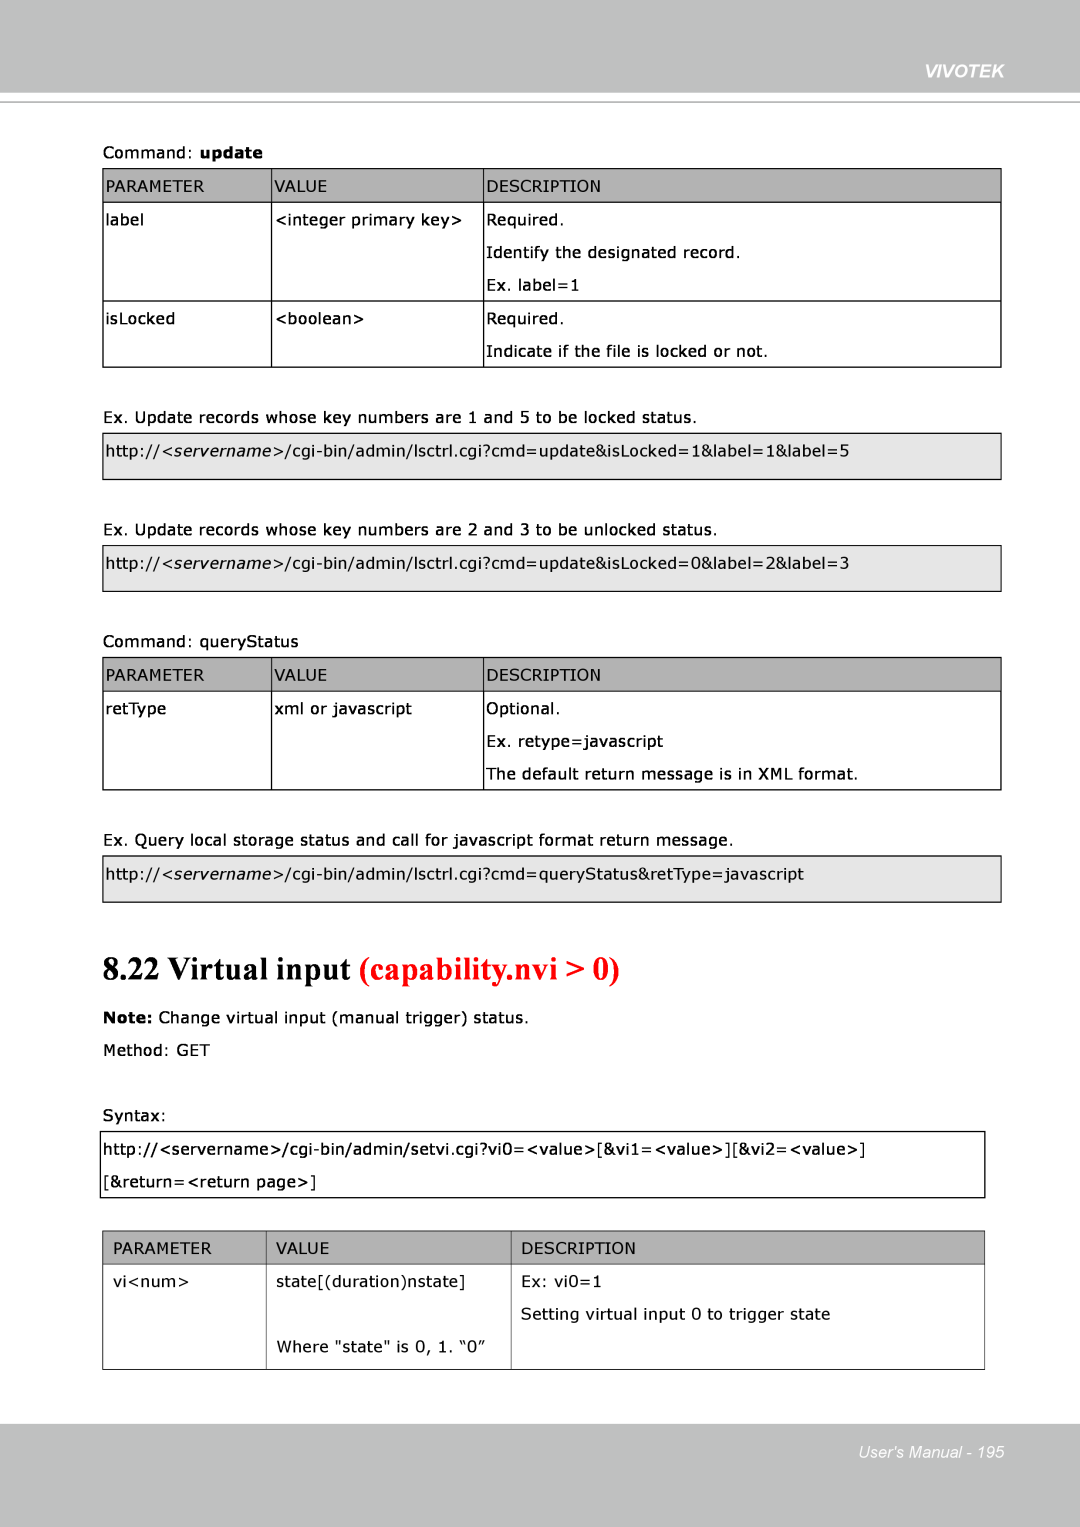 Vivotek FE8171V manual Virtual input capability.nvi >, Vivotek 